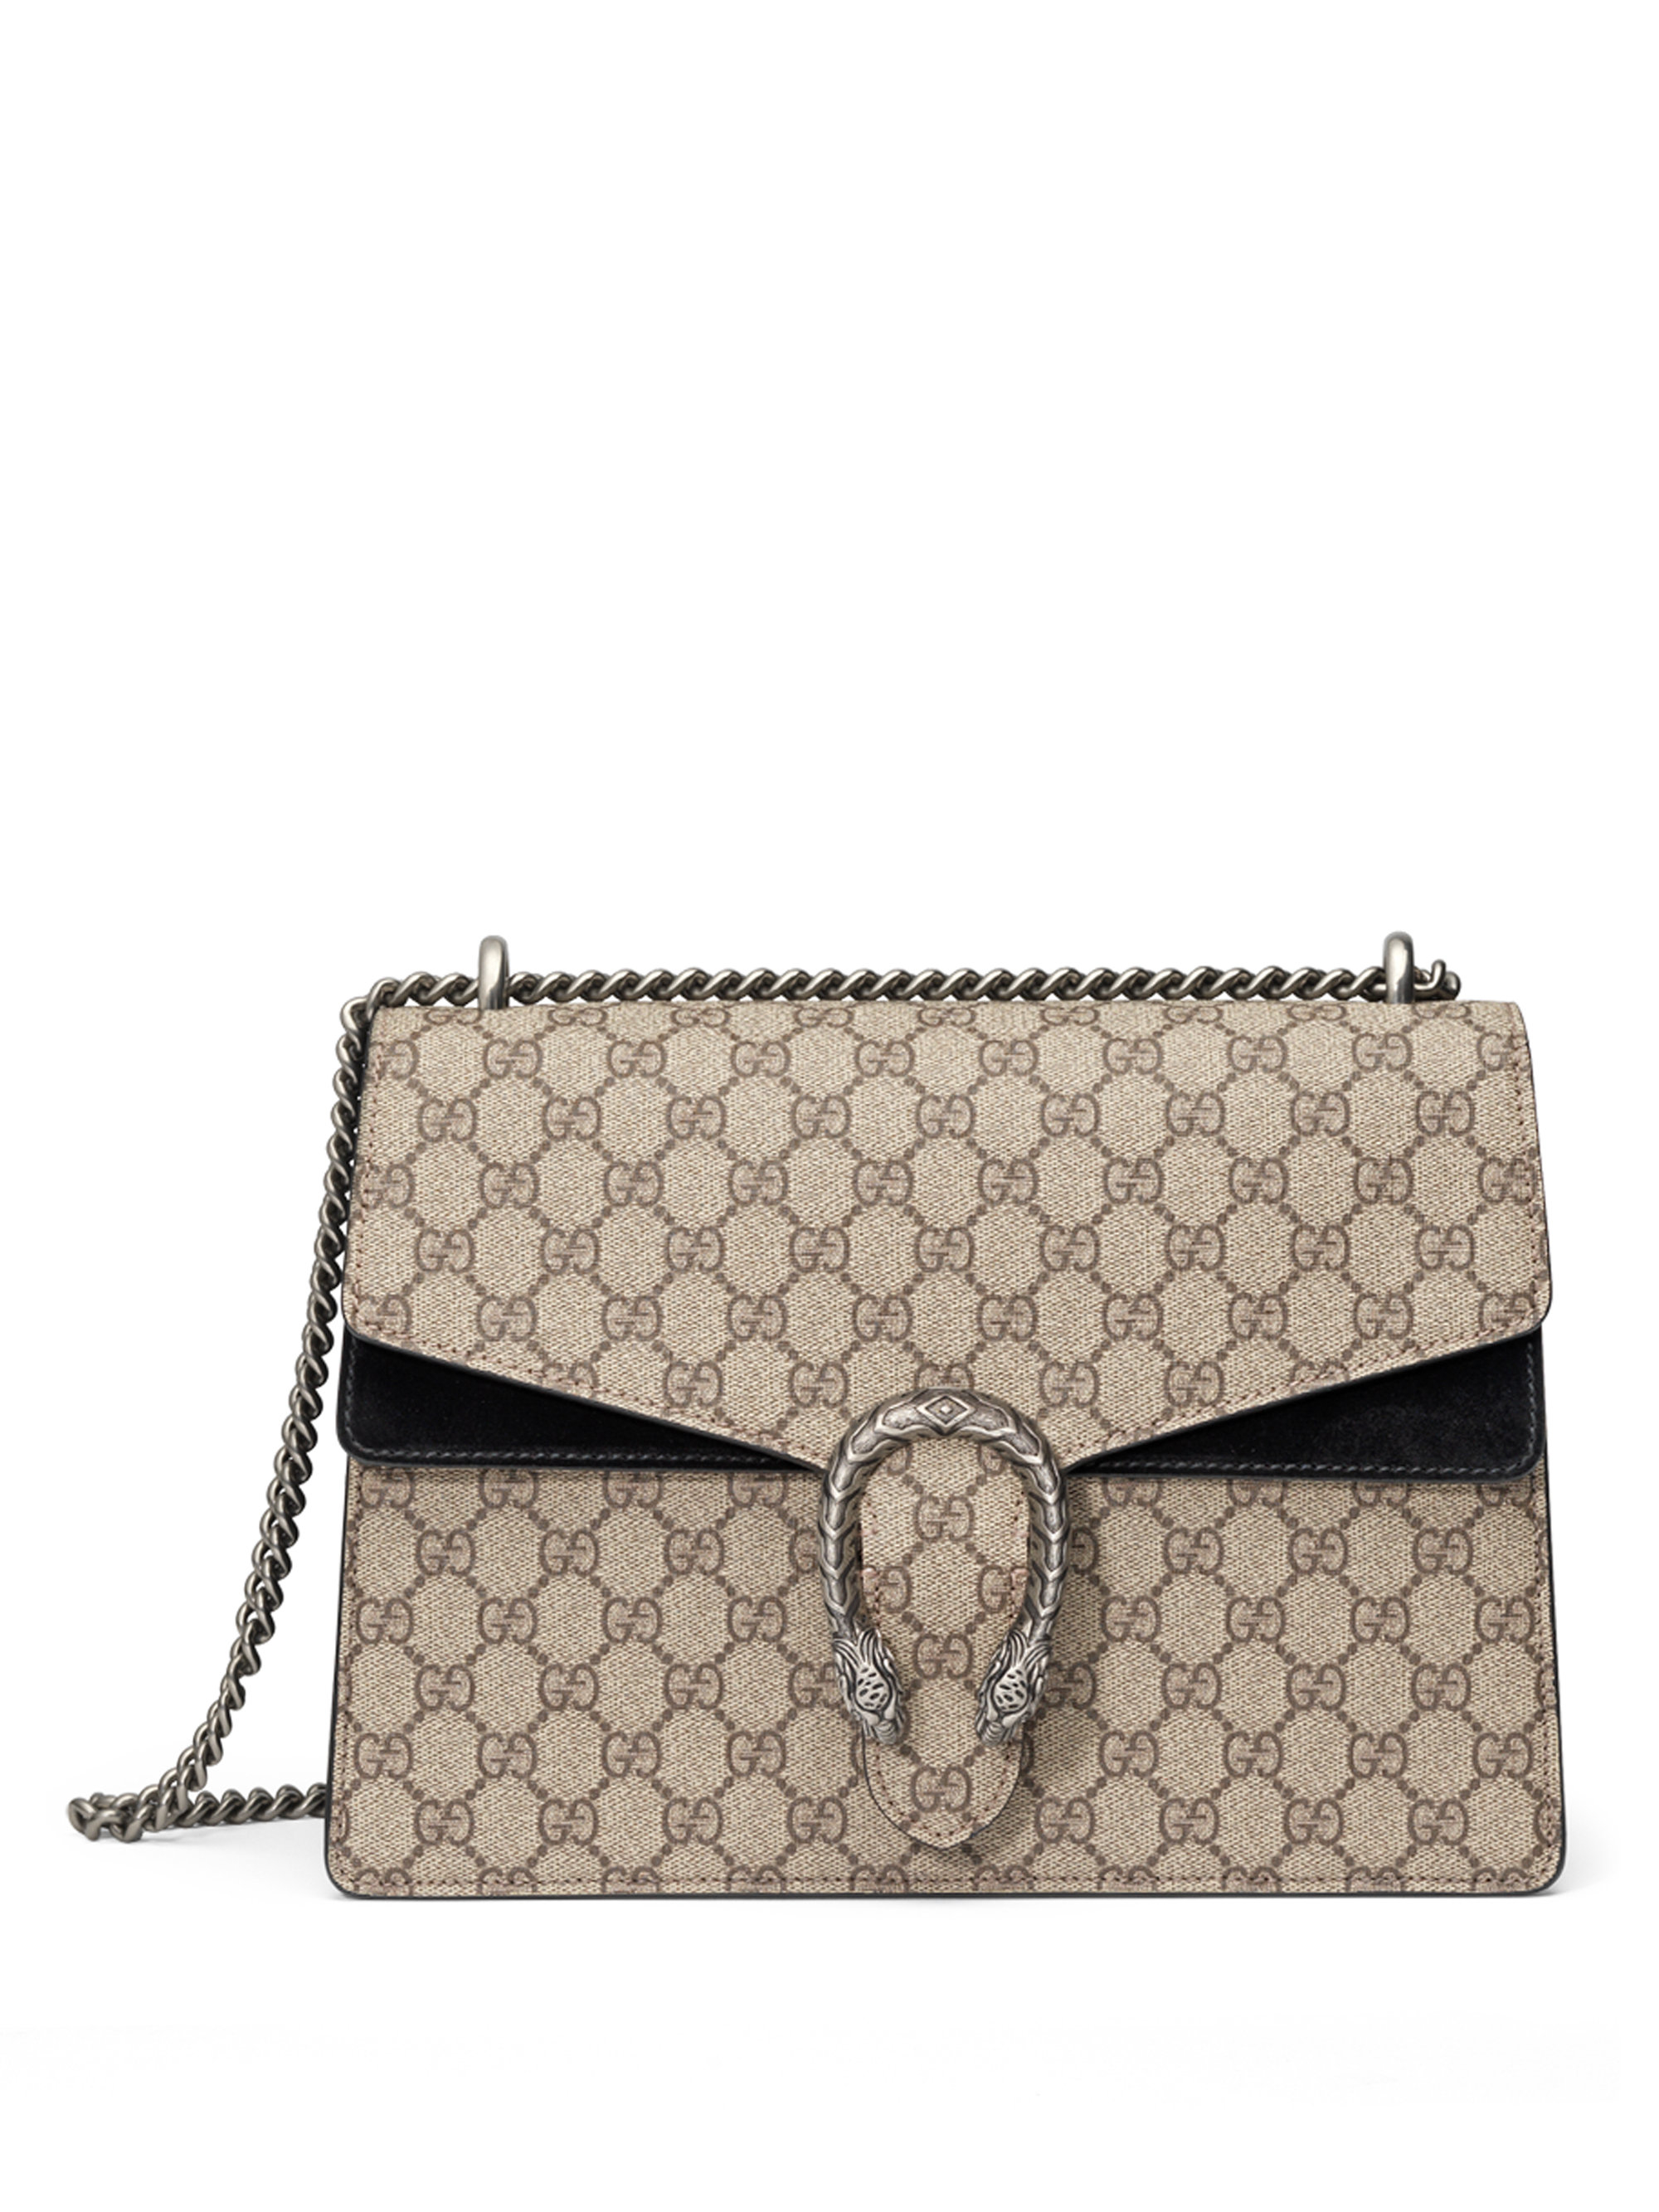 Gucci Dionysus Gg Supreme Medium Canvas Shoulder Bag in Beige (beige ebony-black) | Lyst